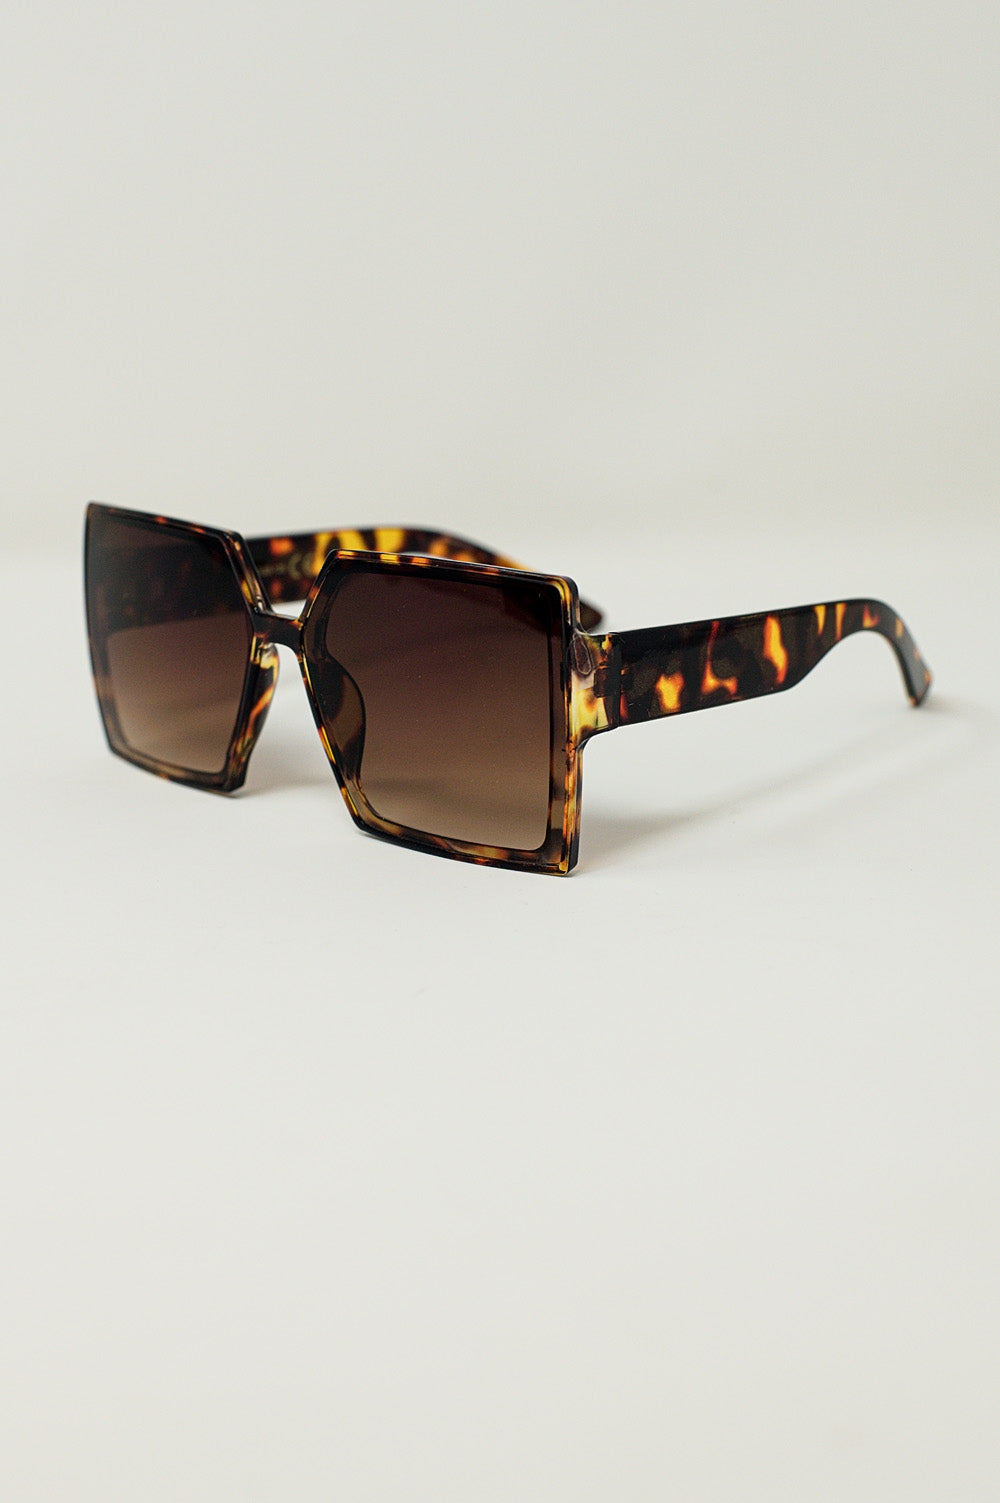 Q2 Oversized Square Sunglasses In brown